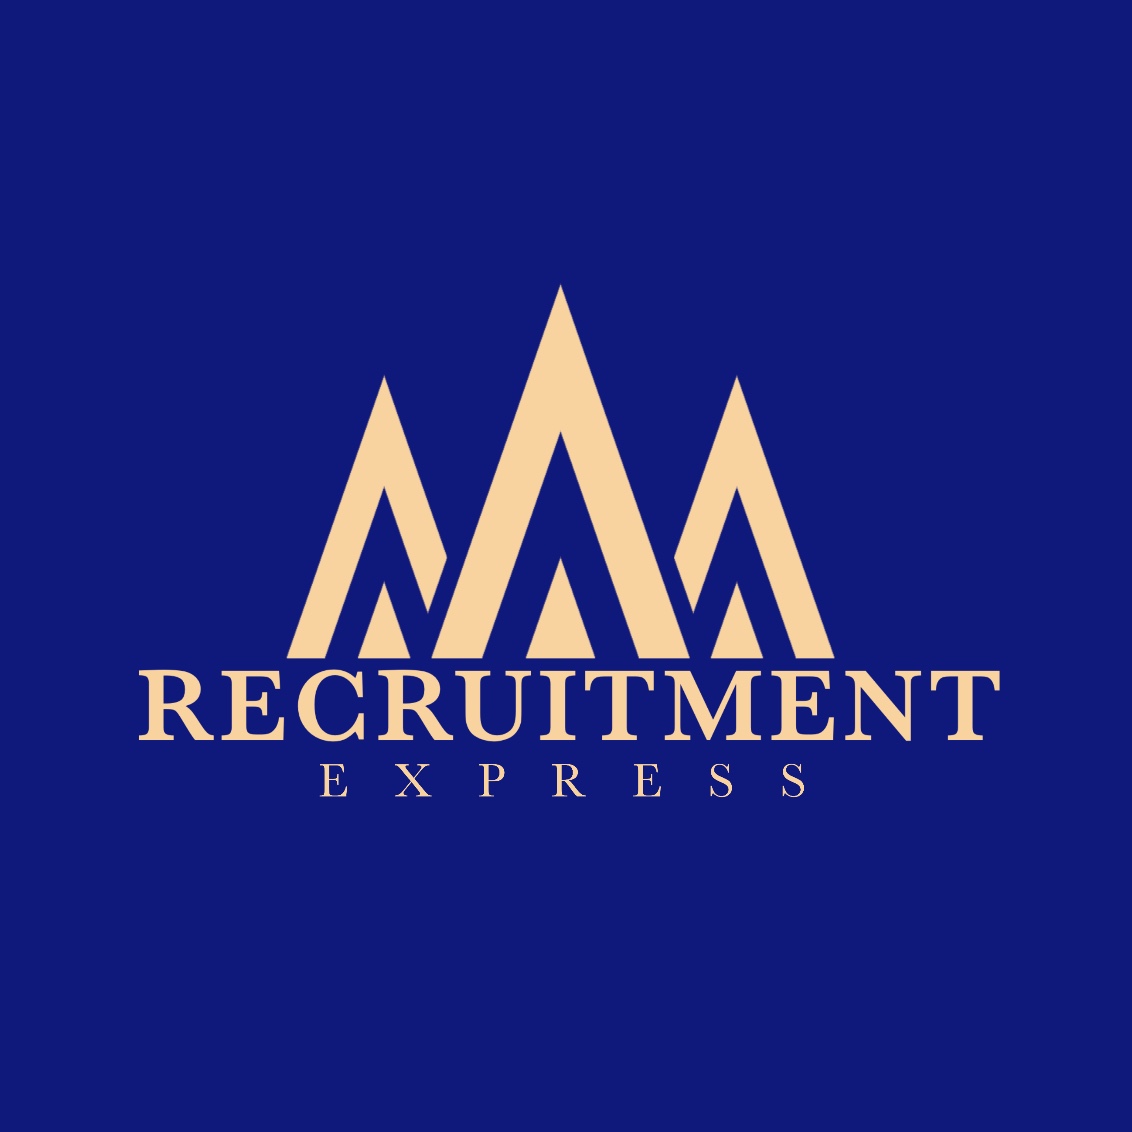 Recruitment Express company logo